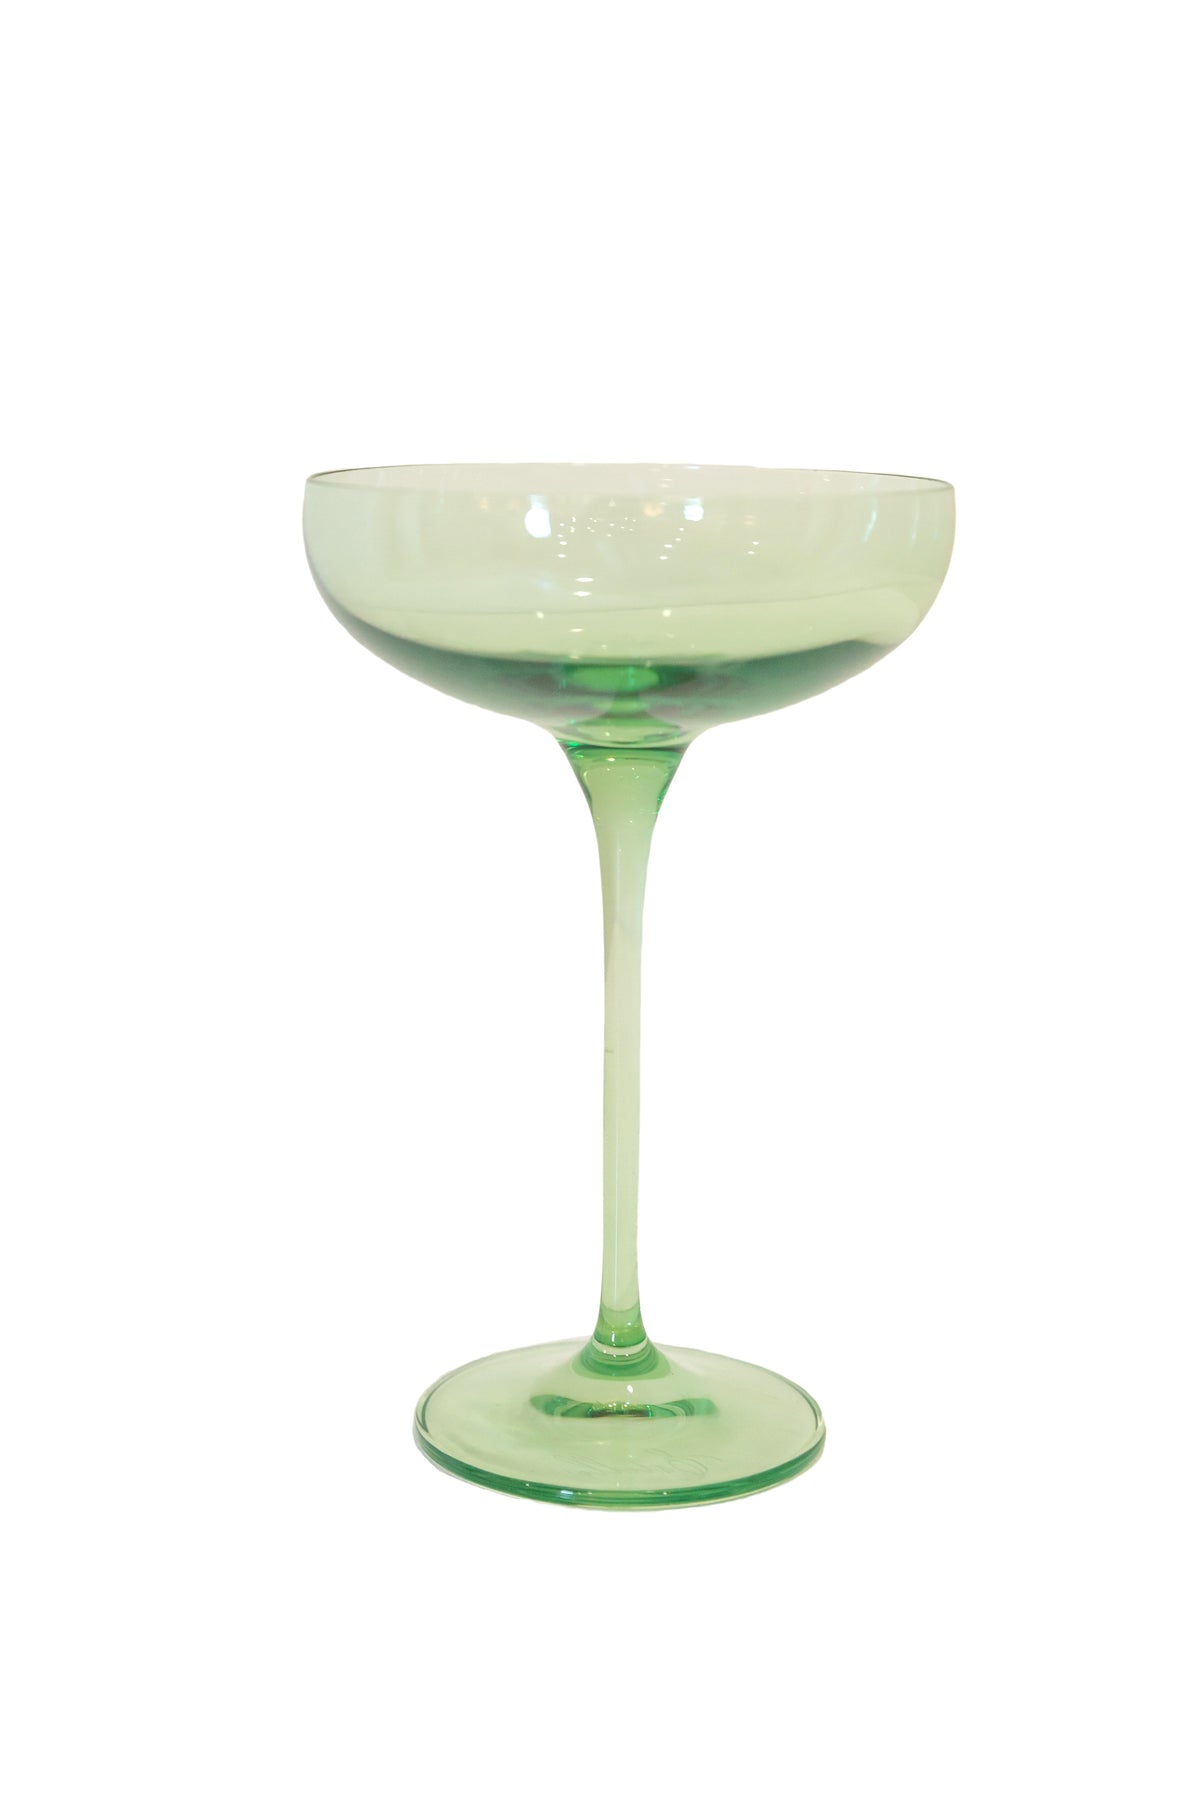 Estelle Colored Glass - Martini Glasses - Set of 6 Mint Green